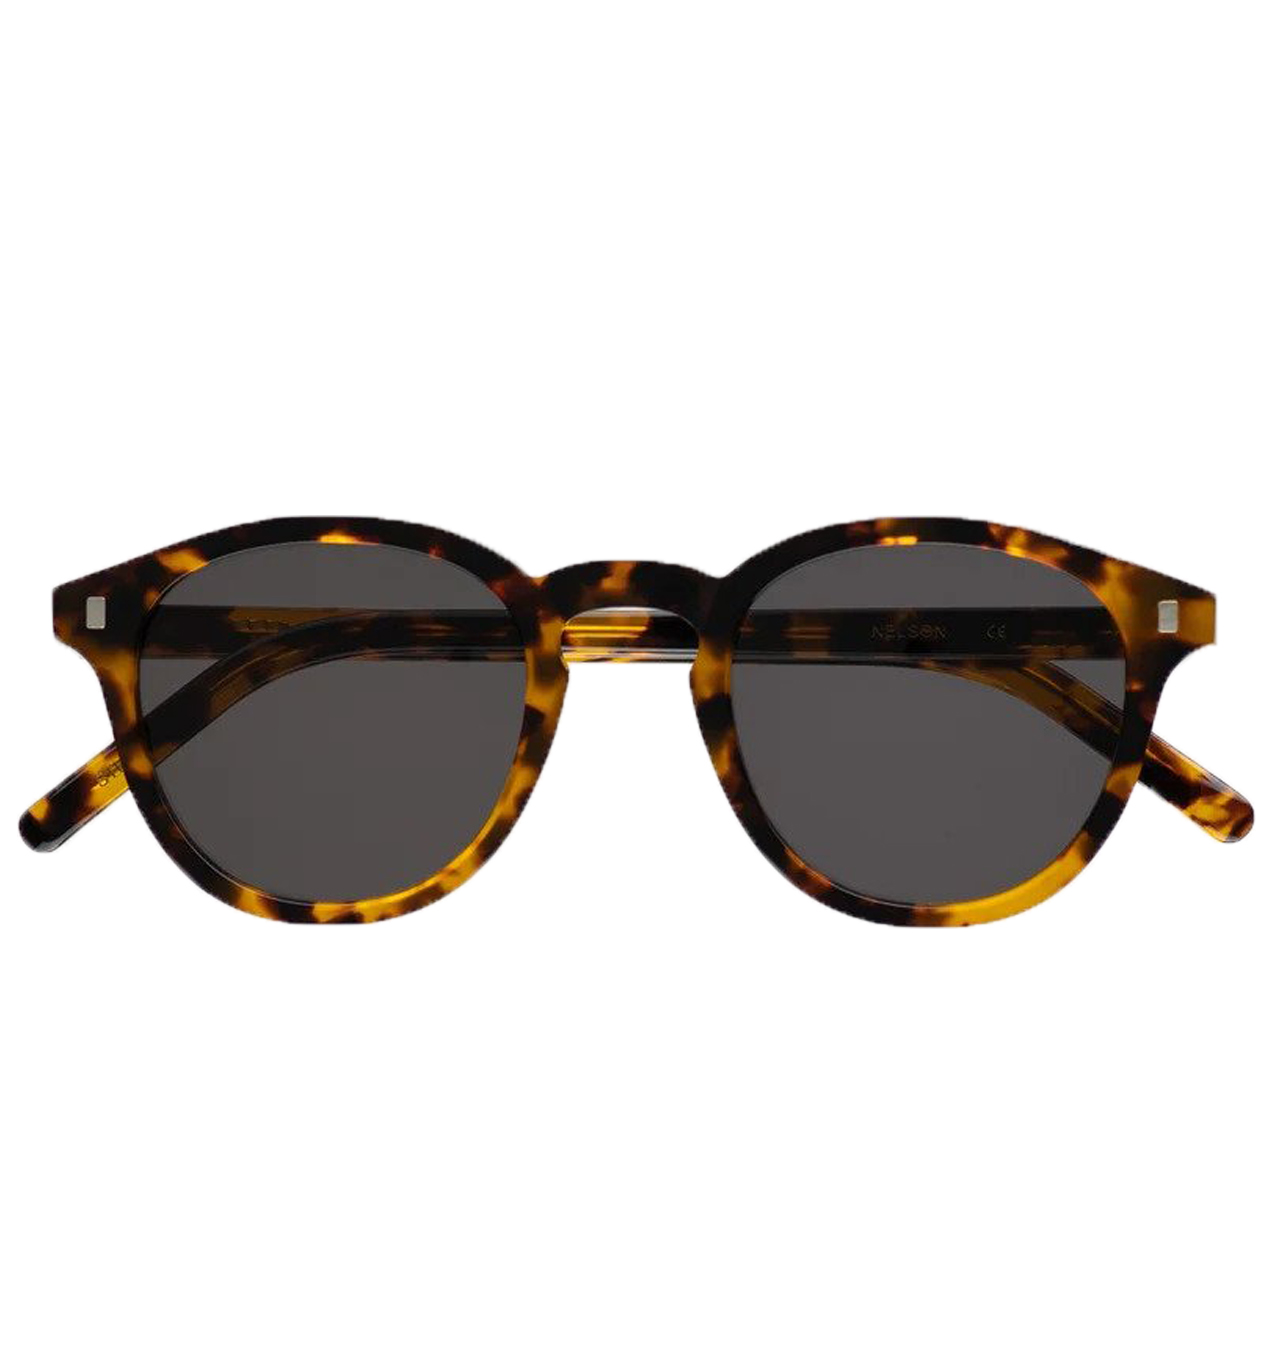 Monokel Eyewear - Nelson Havana Sunglasses - Grey Solid Lens